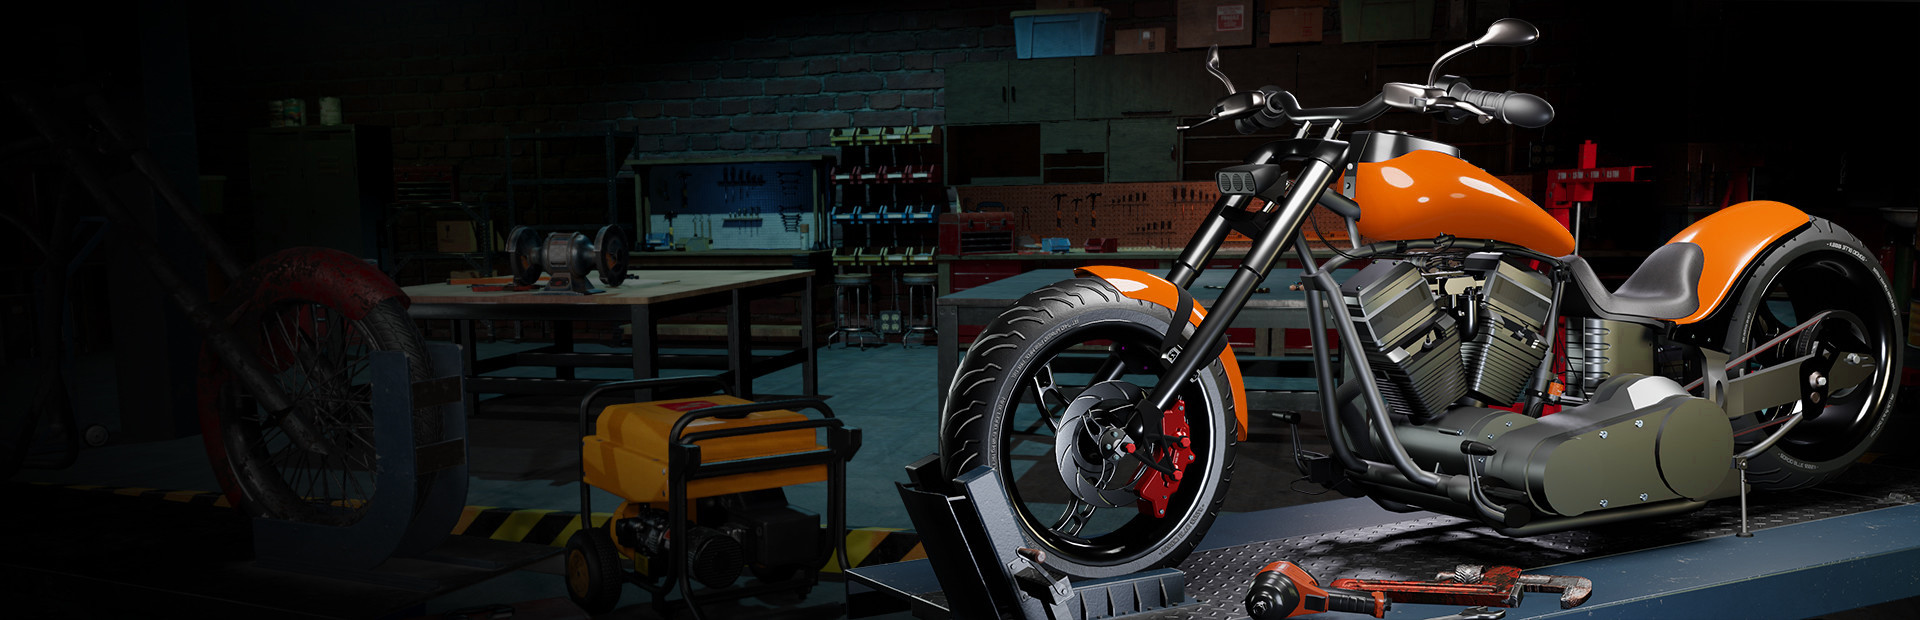 Motorcycle Mechanic Simulator 2021: Prologue cover image